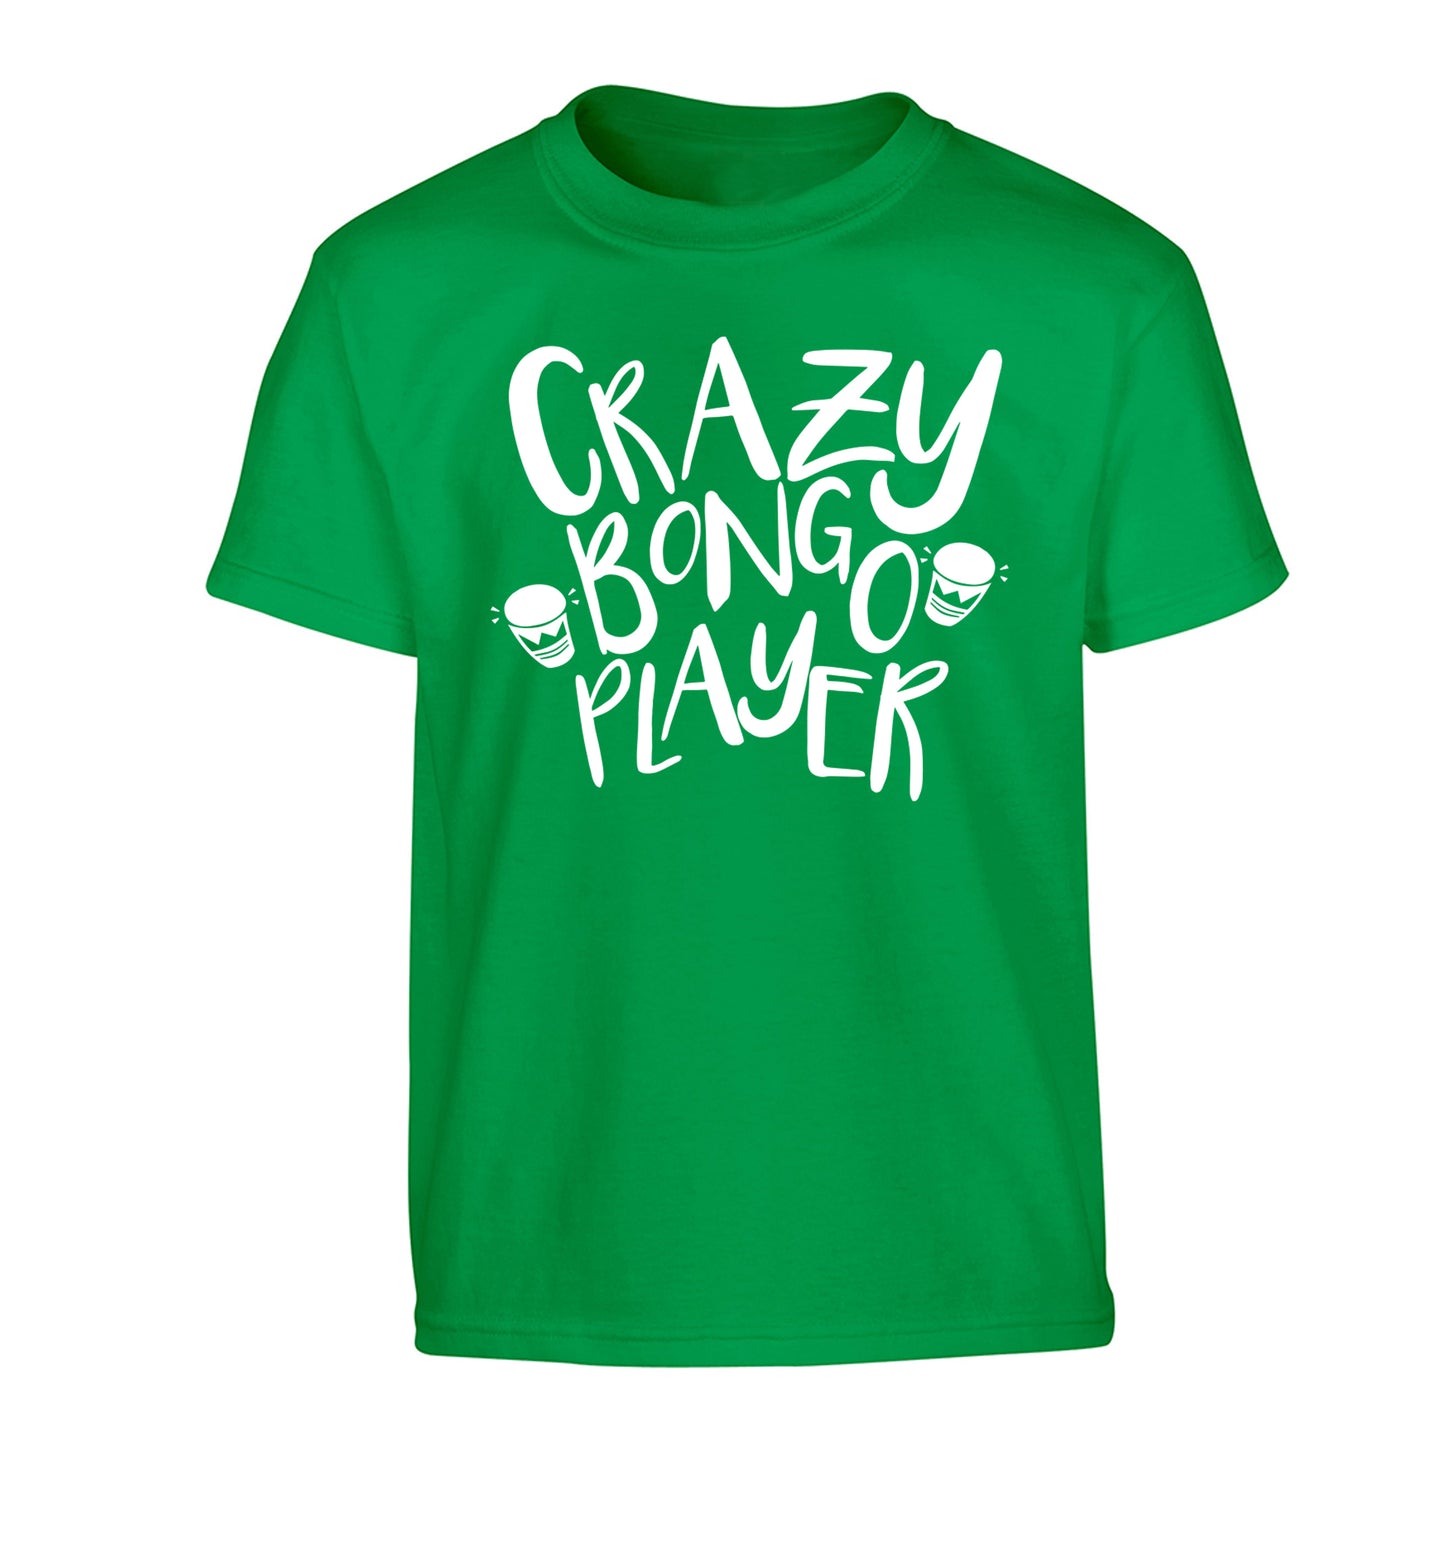 Crazy bongo player Children's green Tshirt 12-14 Years